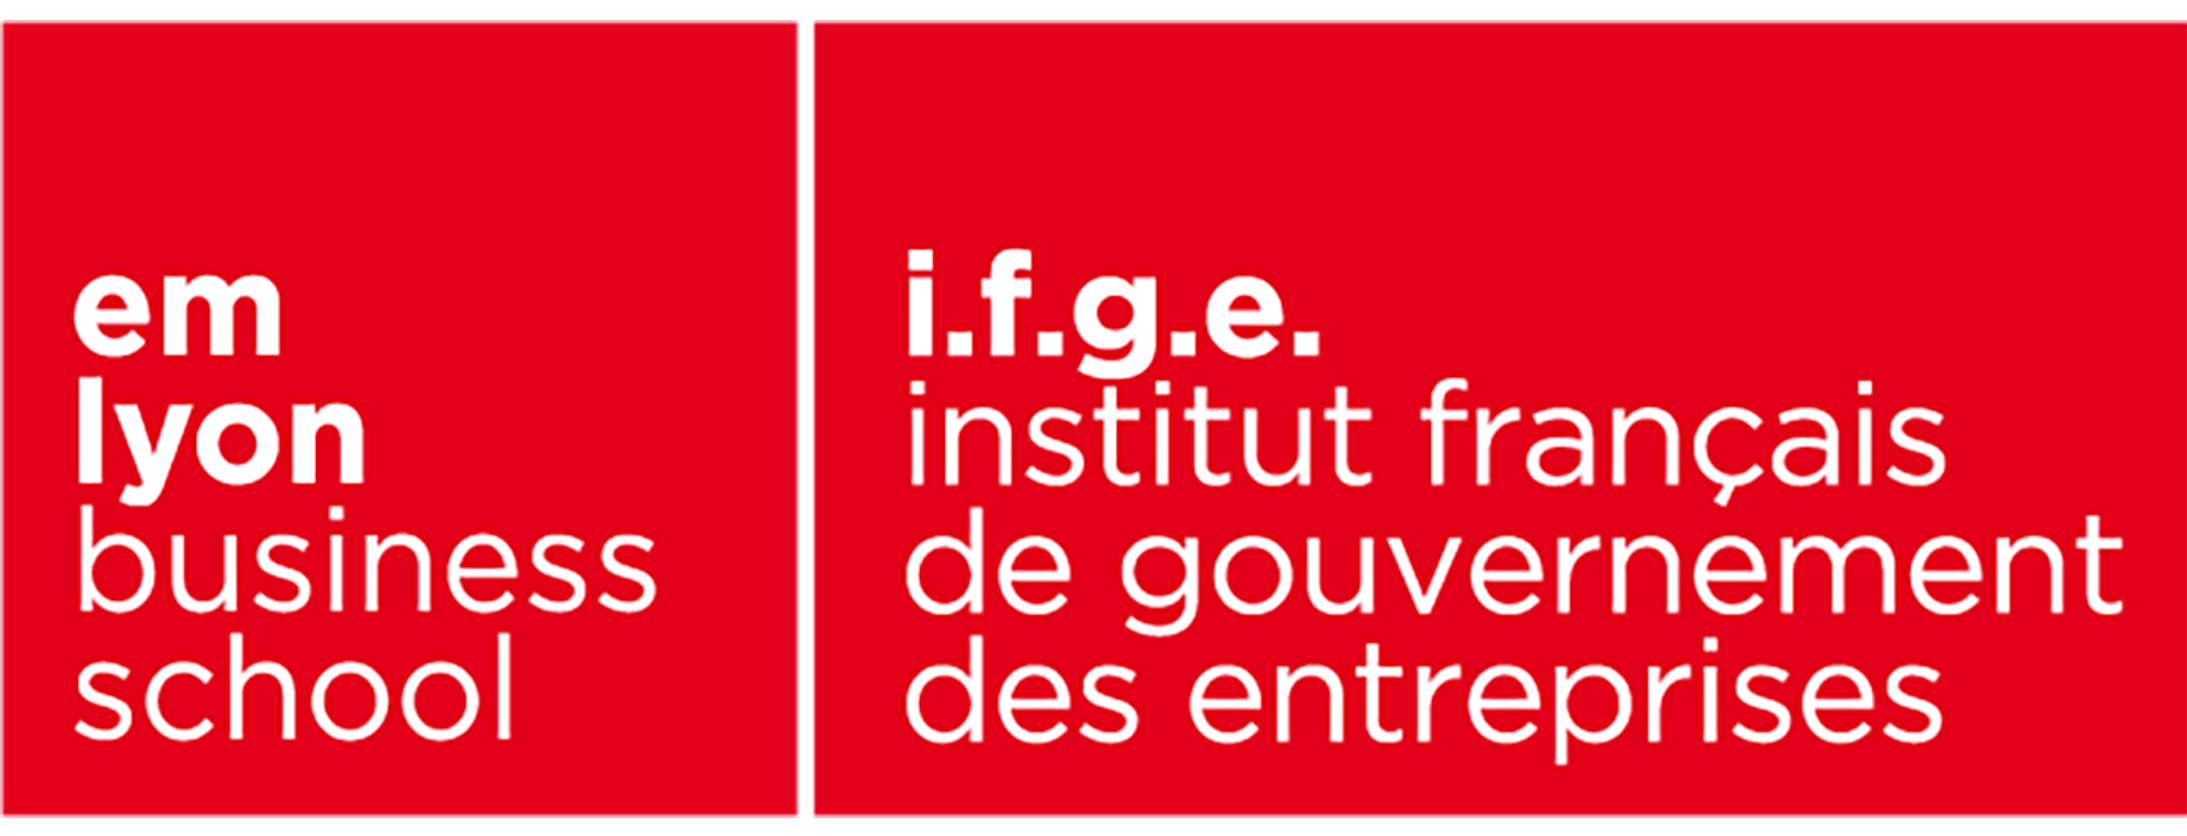 Logo EM lyon et IFGE